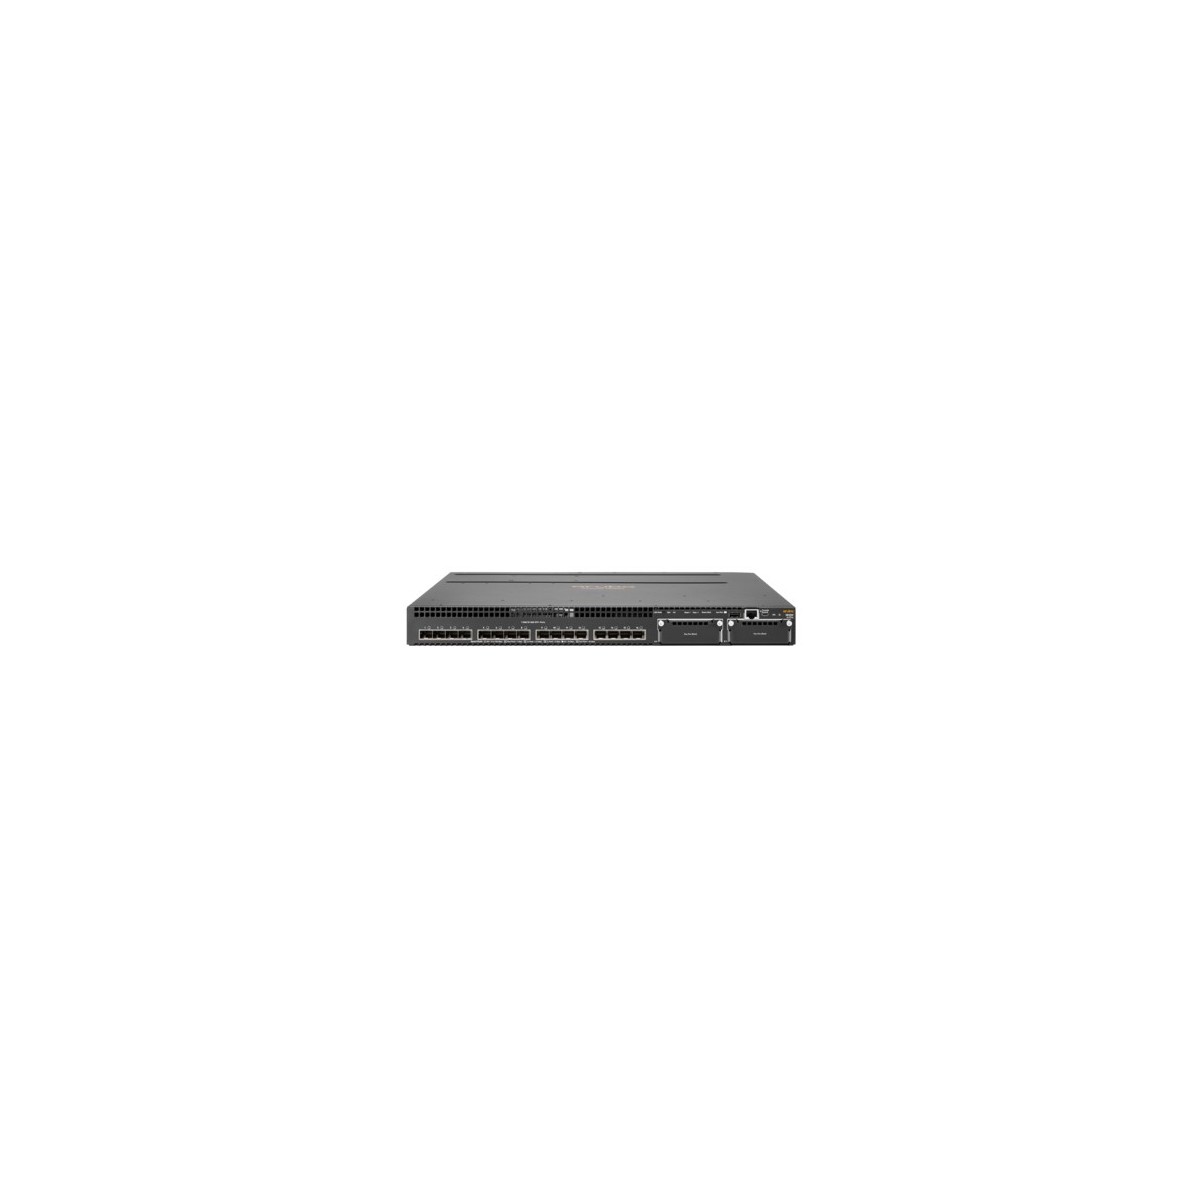 HPE 3810M 16SFP+ 2-slot Switch - Managed - L3 - Full duplex - Rack mounting - 1U